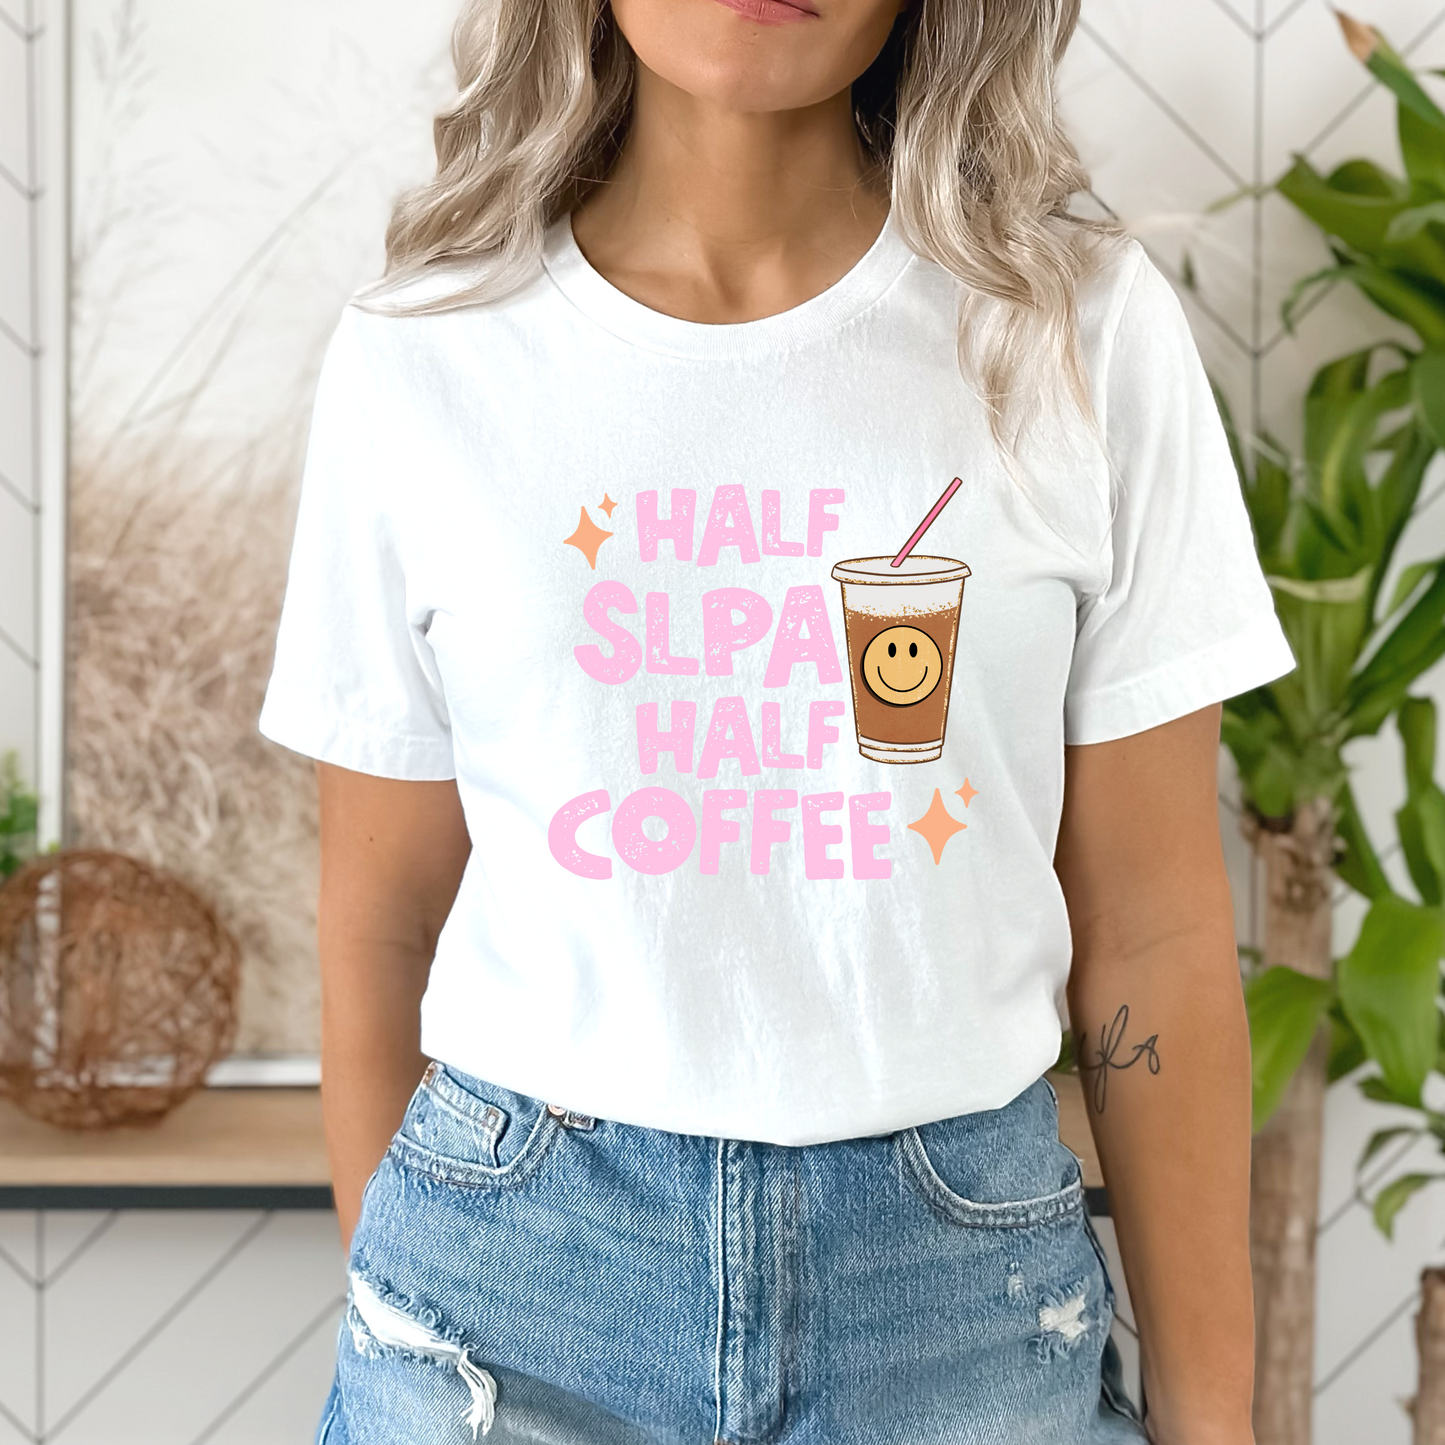 Half SLPA Half Coffee Jersey T-Shirt